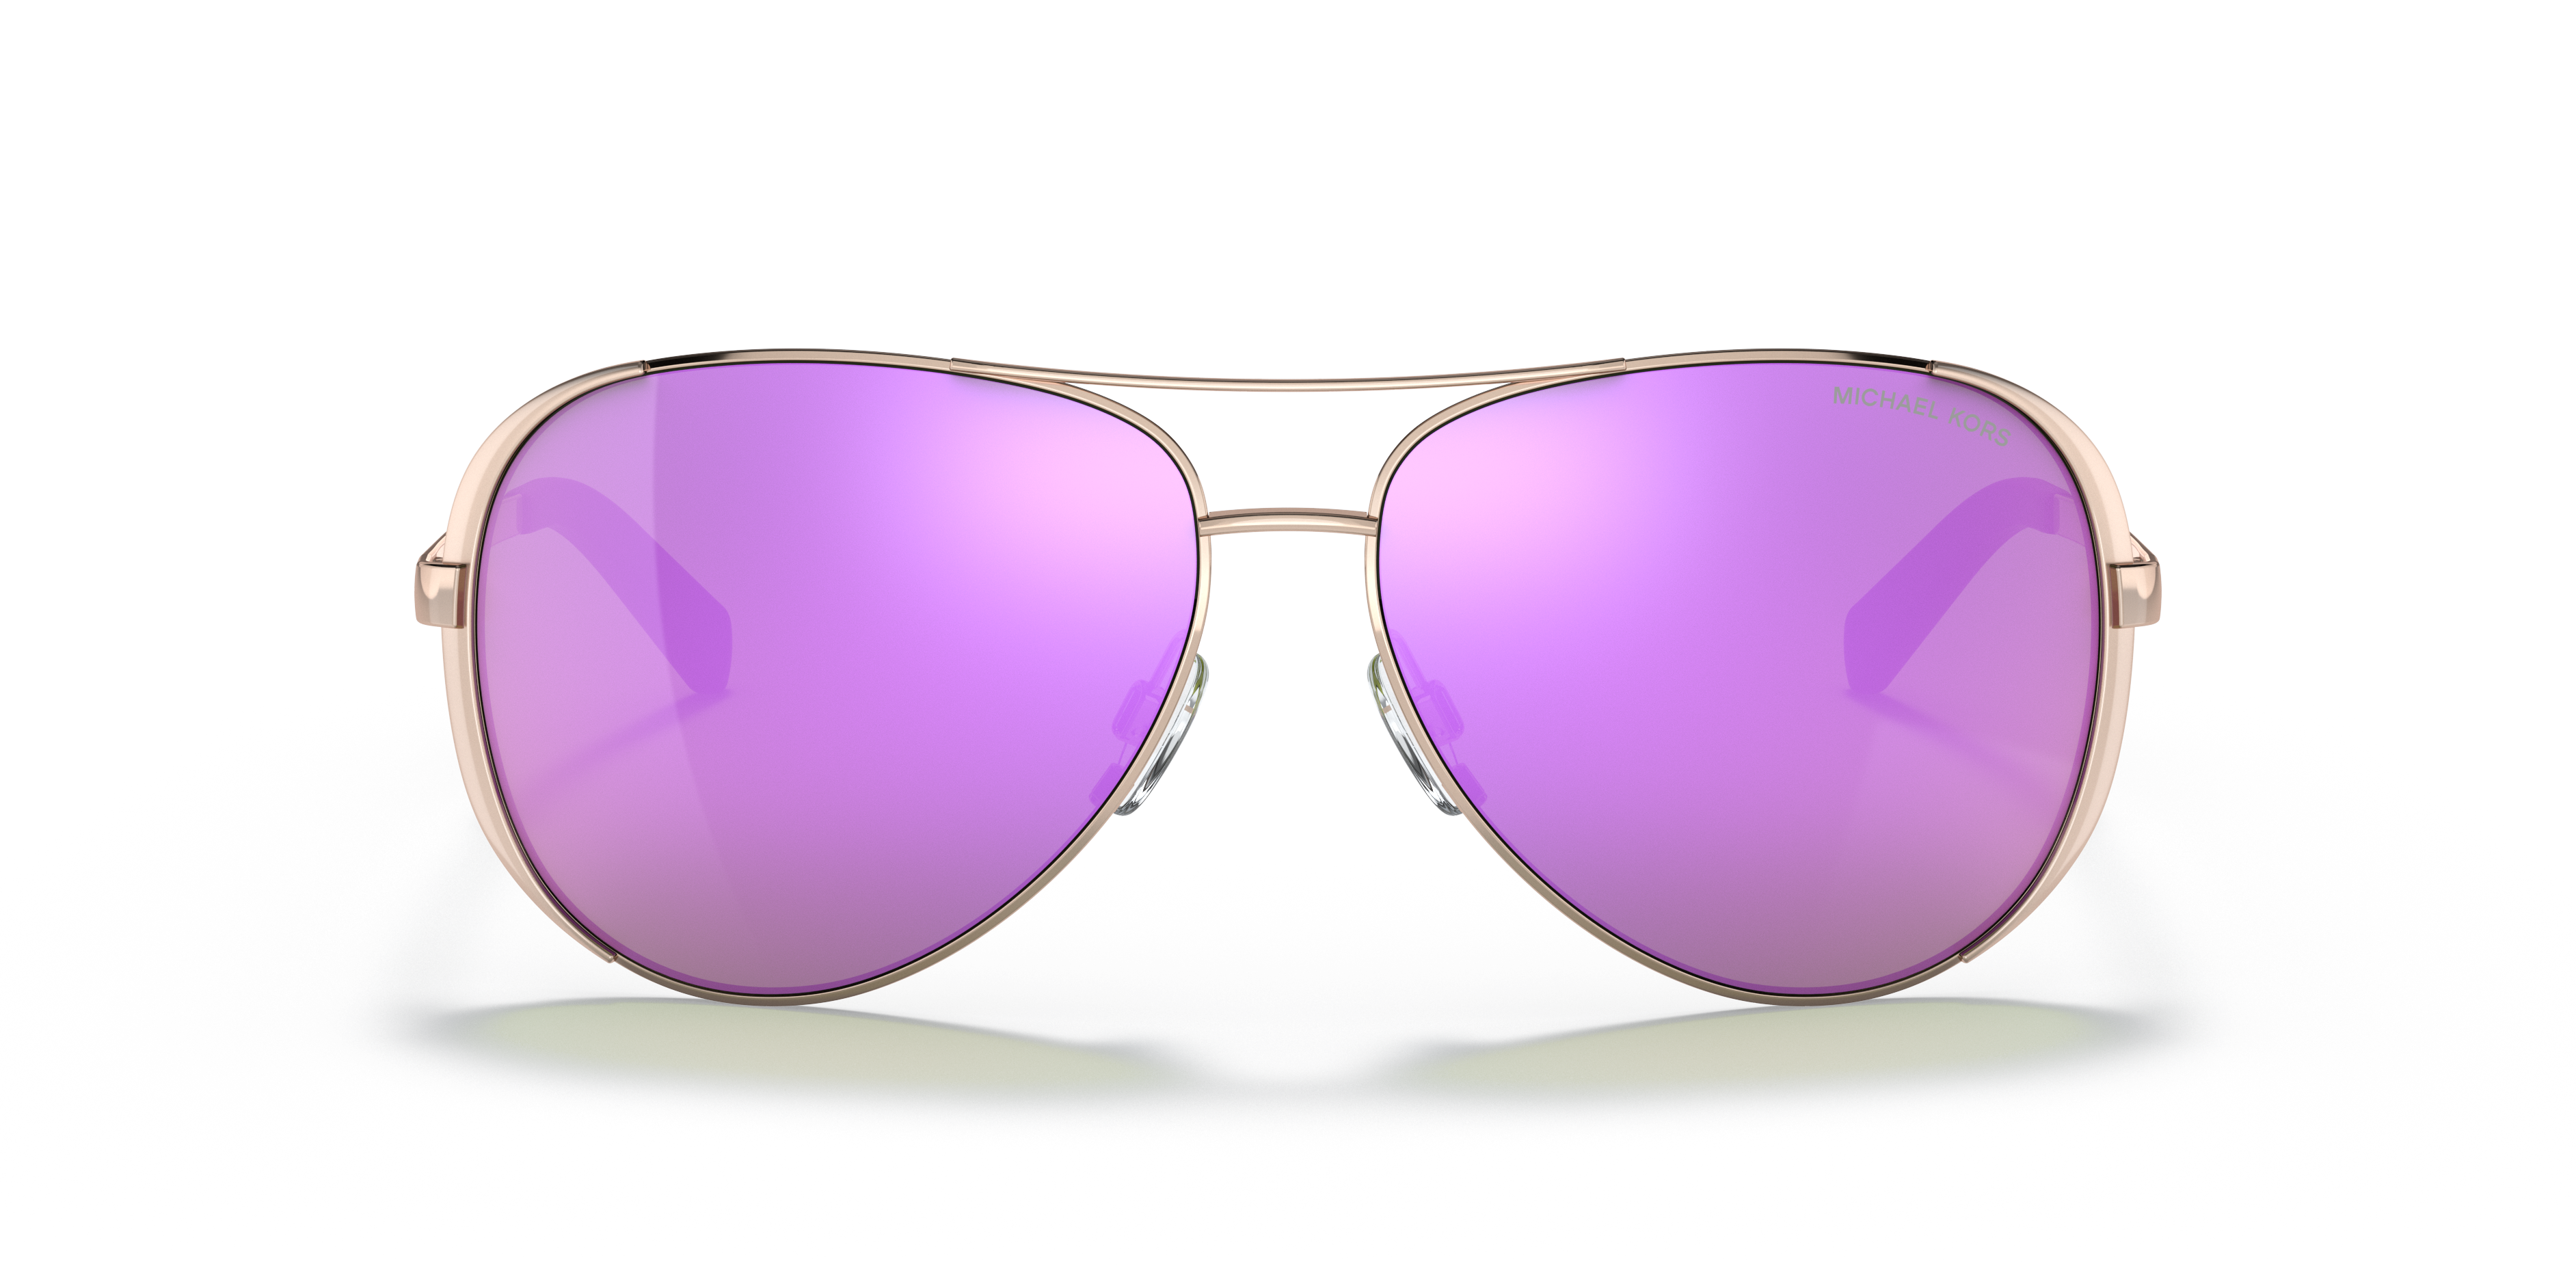 Michael Kors Purple Sunglasses Like New wwwfiestaci